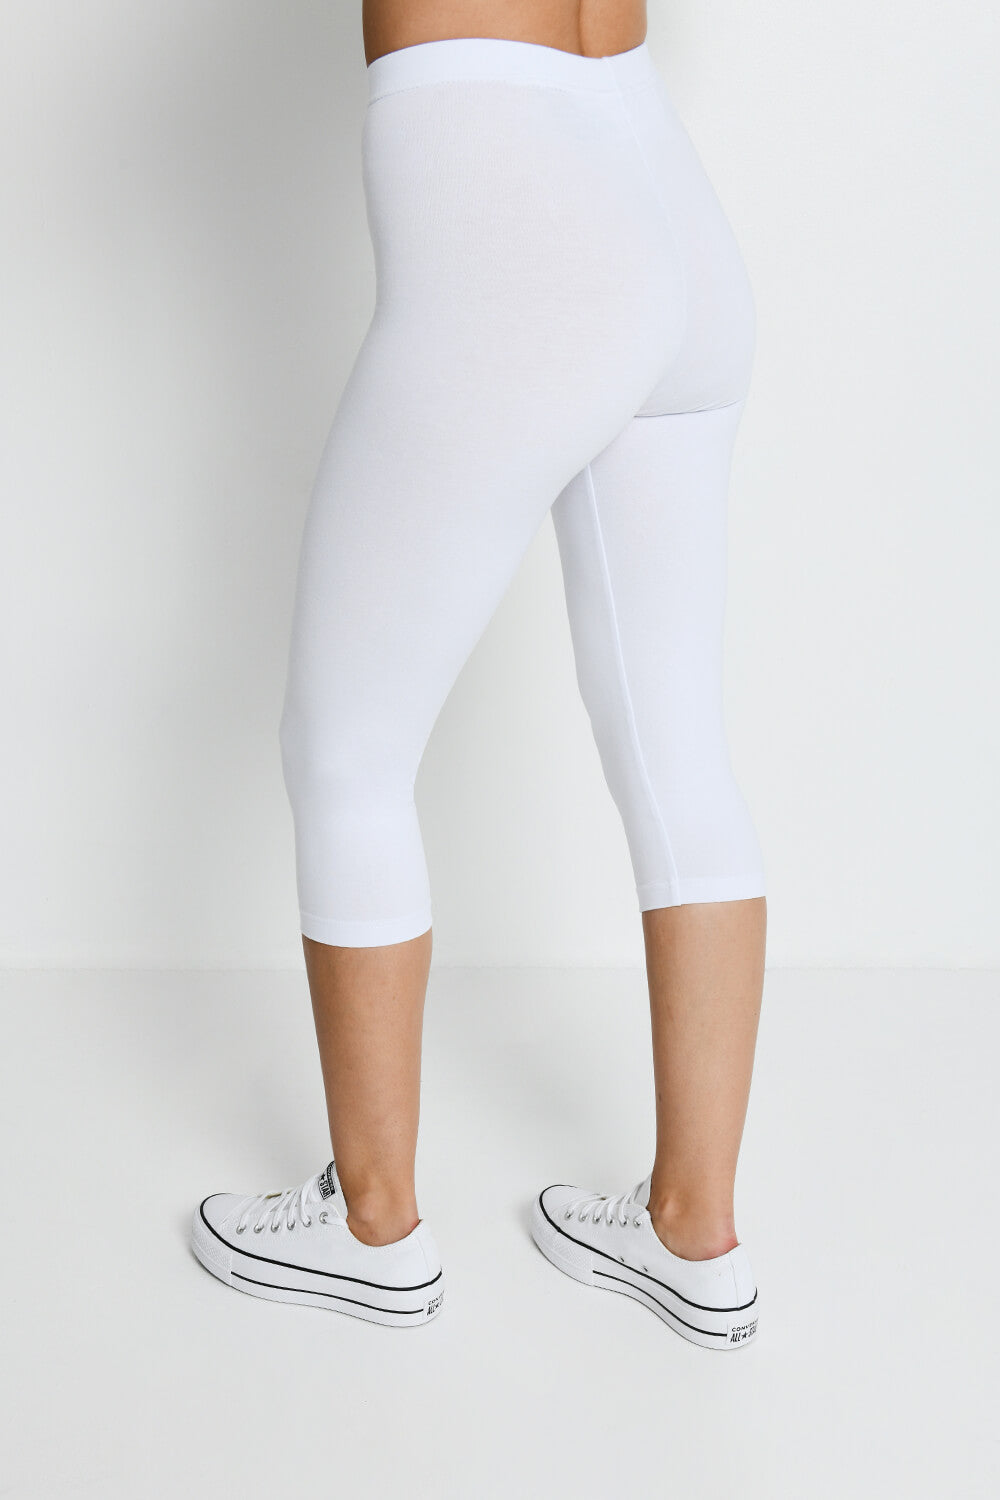 Buy Stunning Collection Capri Leggings for Girls White at Amazon.in